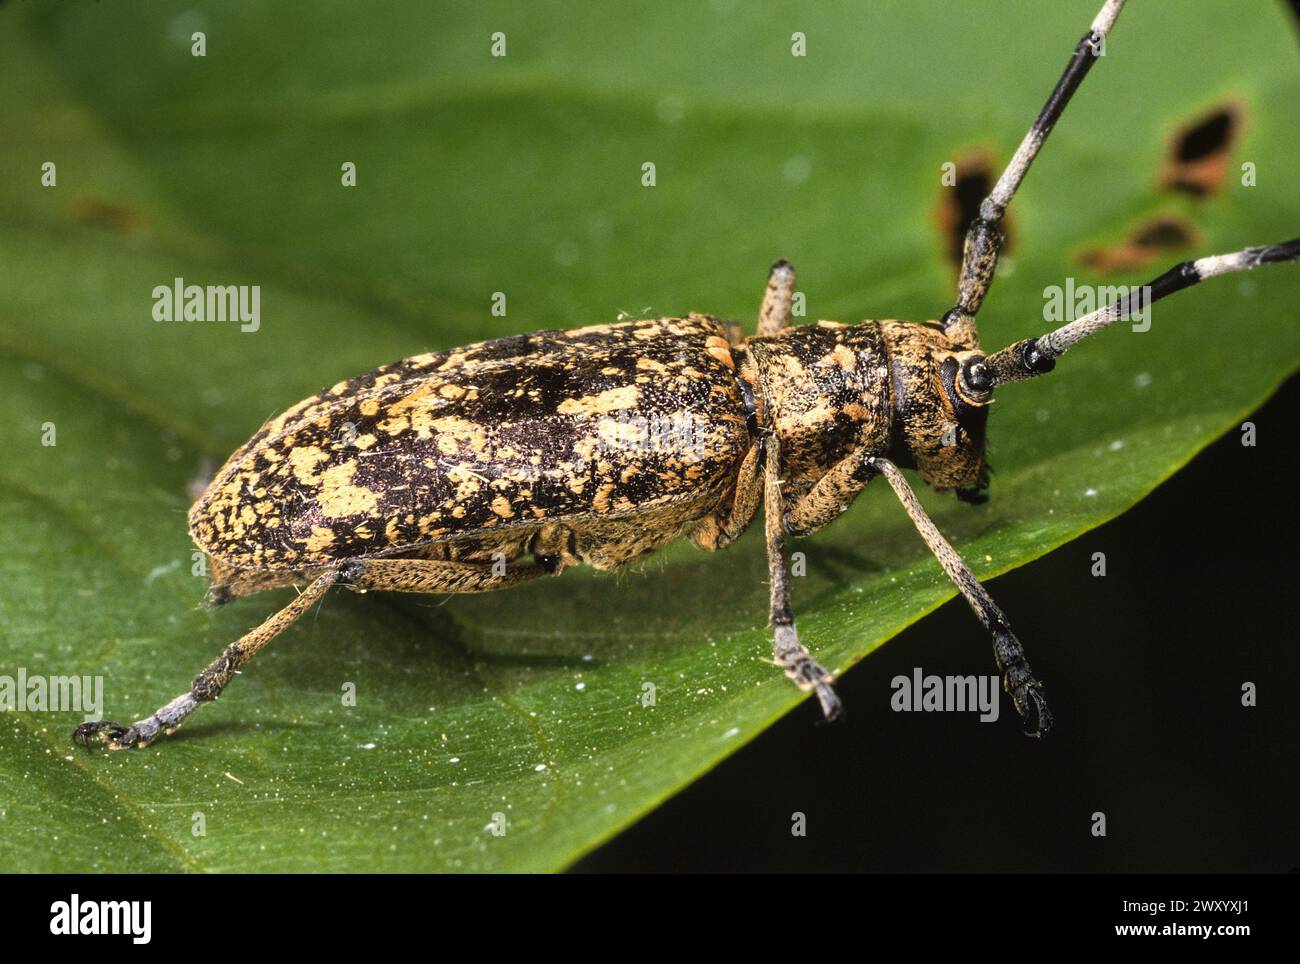 Carpenter sawyer beetle (Monochamus sartor), sitting on a leaf, Germany Stock Photo